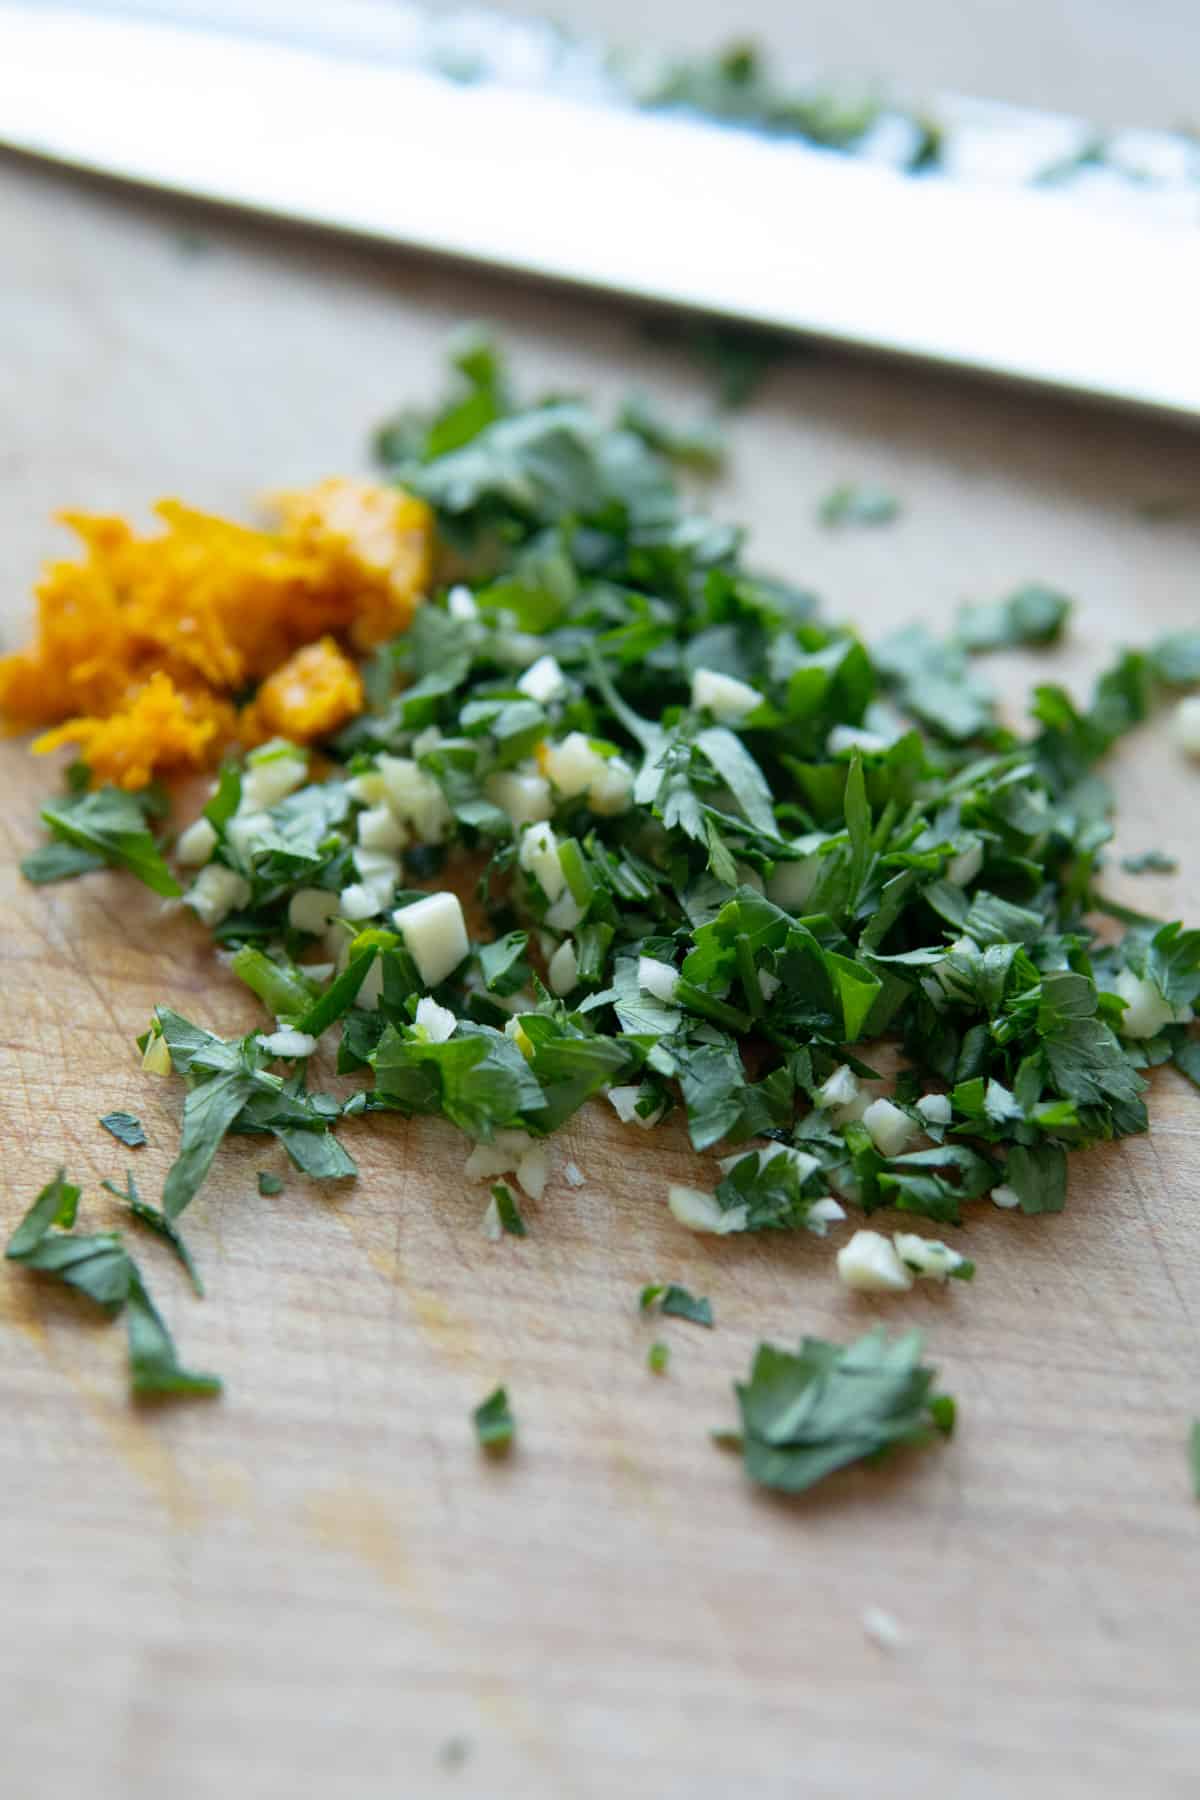 chopped up gremolata mixture of orange zest, garlic and parsley. 